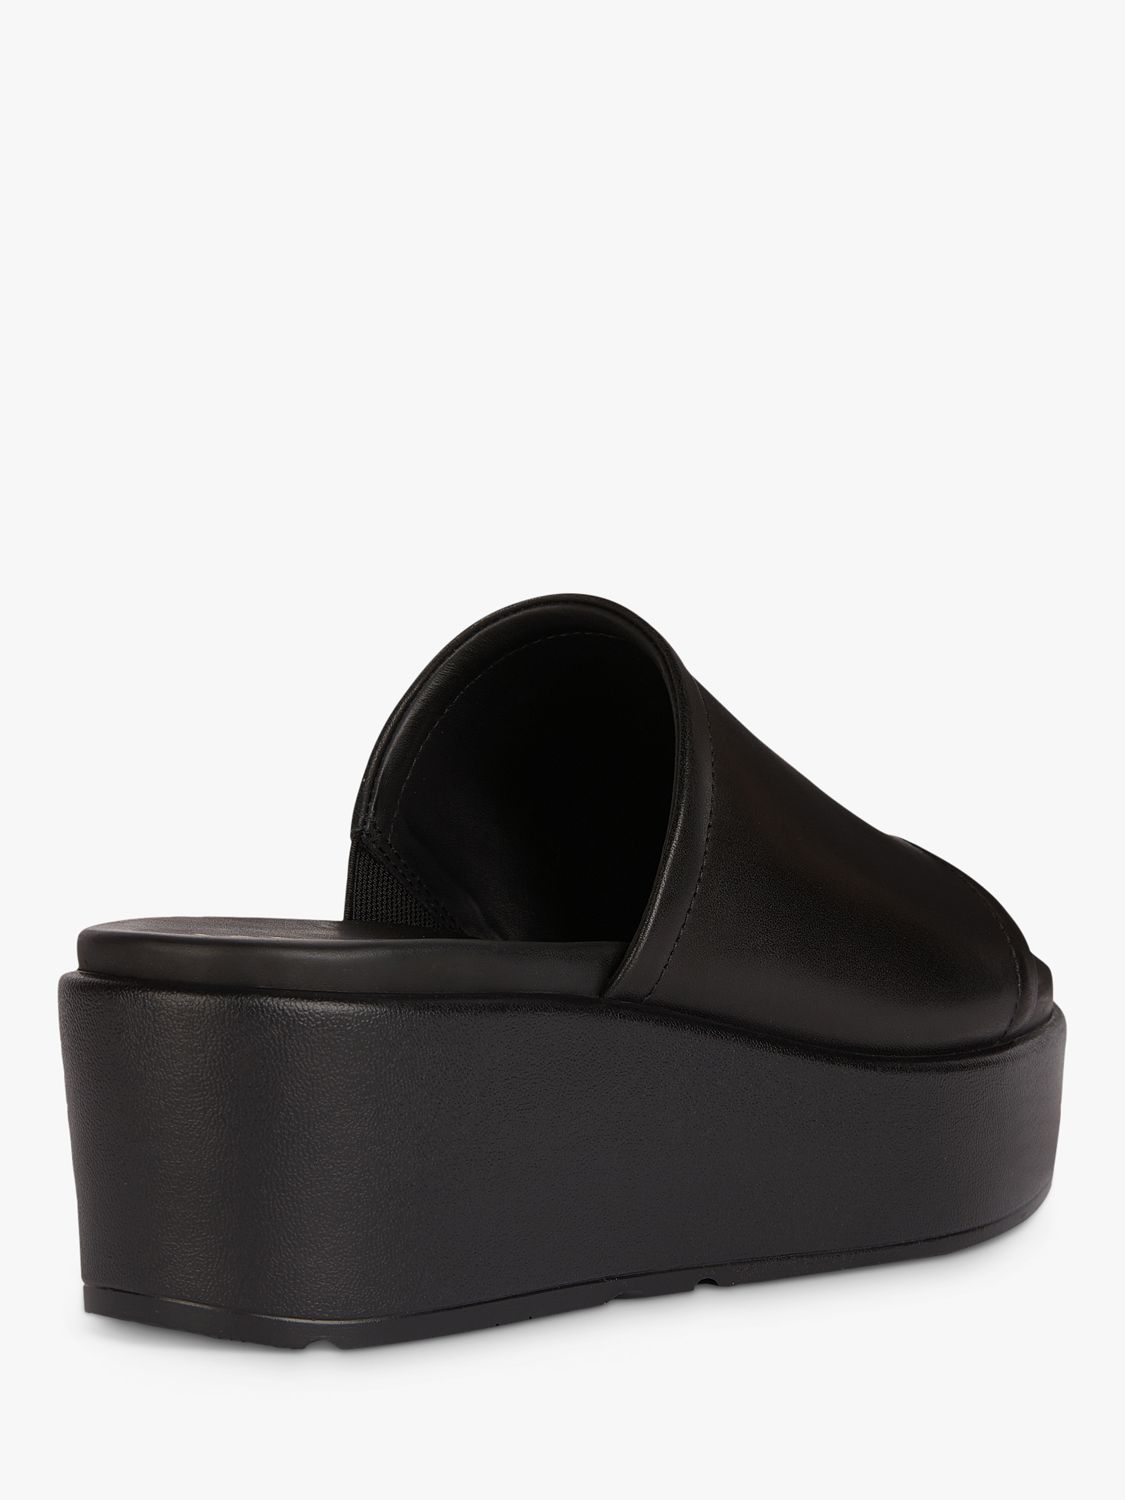 Geox Xand 2.2S Leather Platform Wedge Sandals, Black, EU36